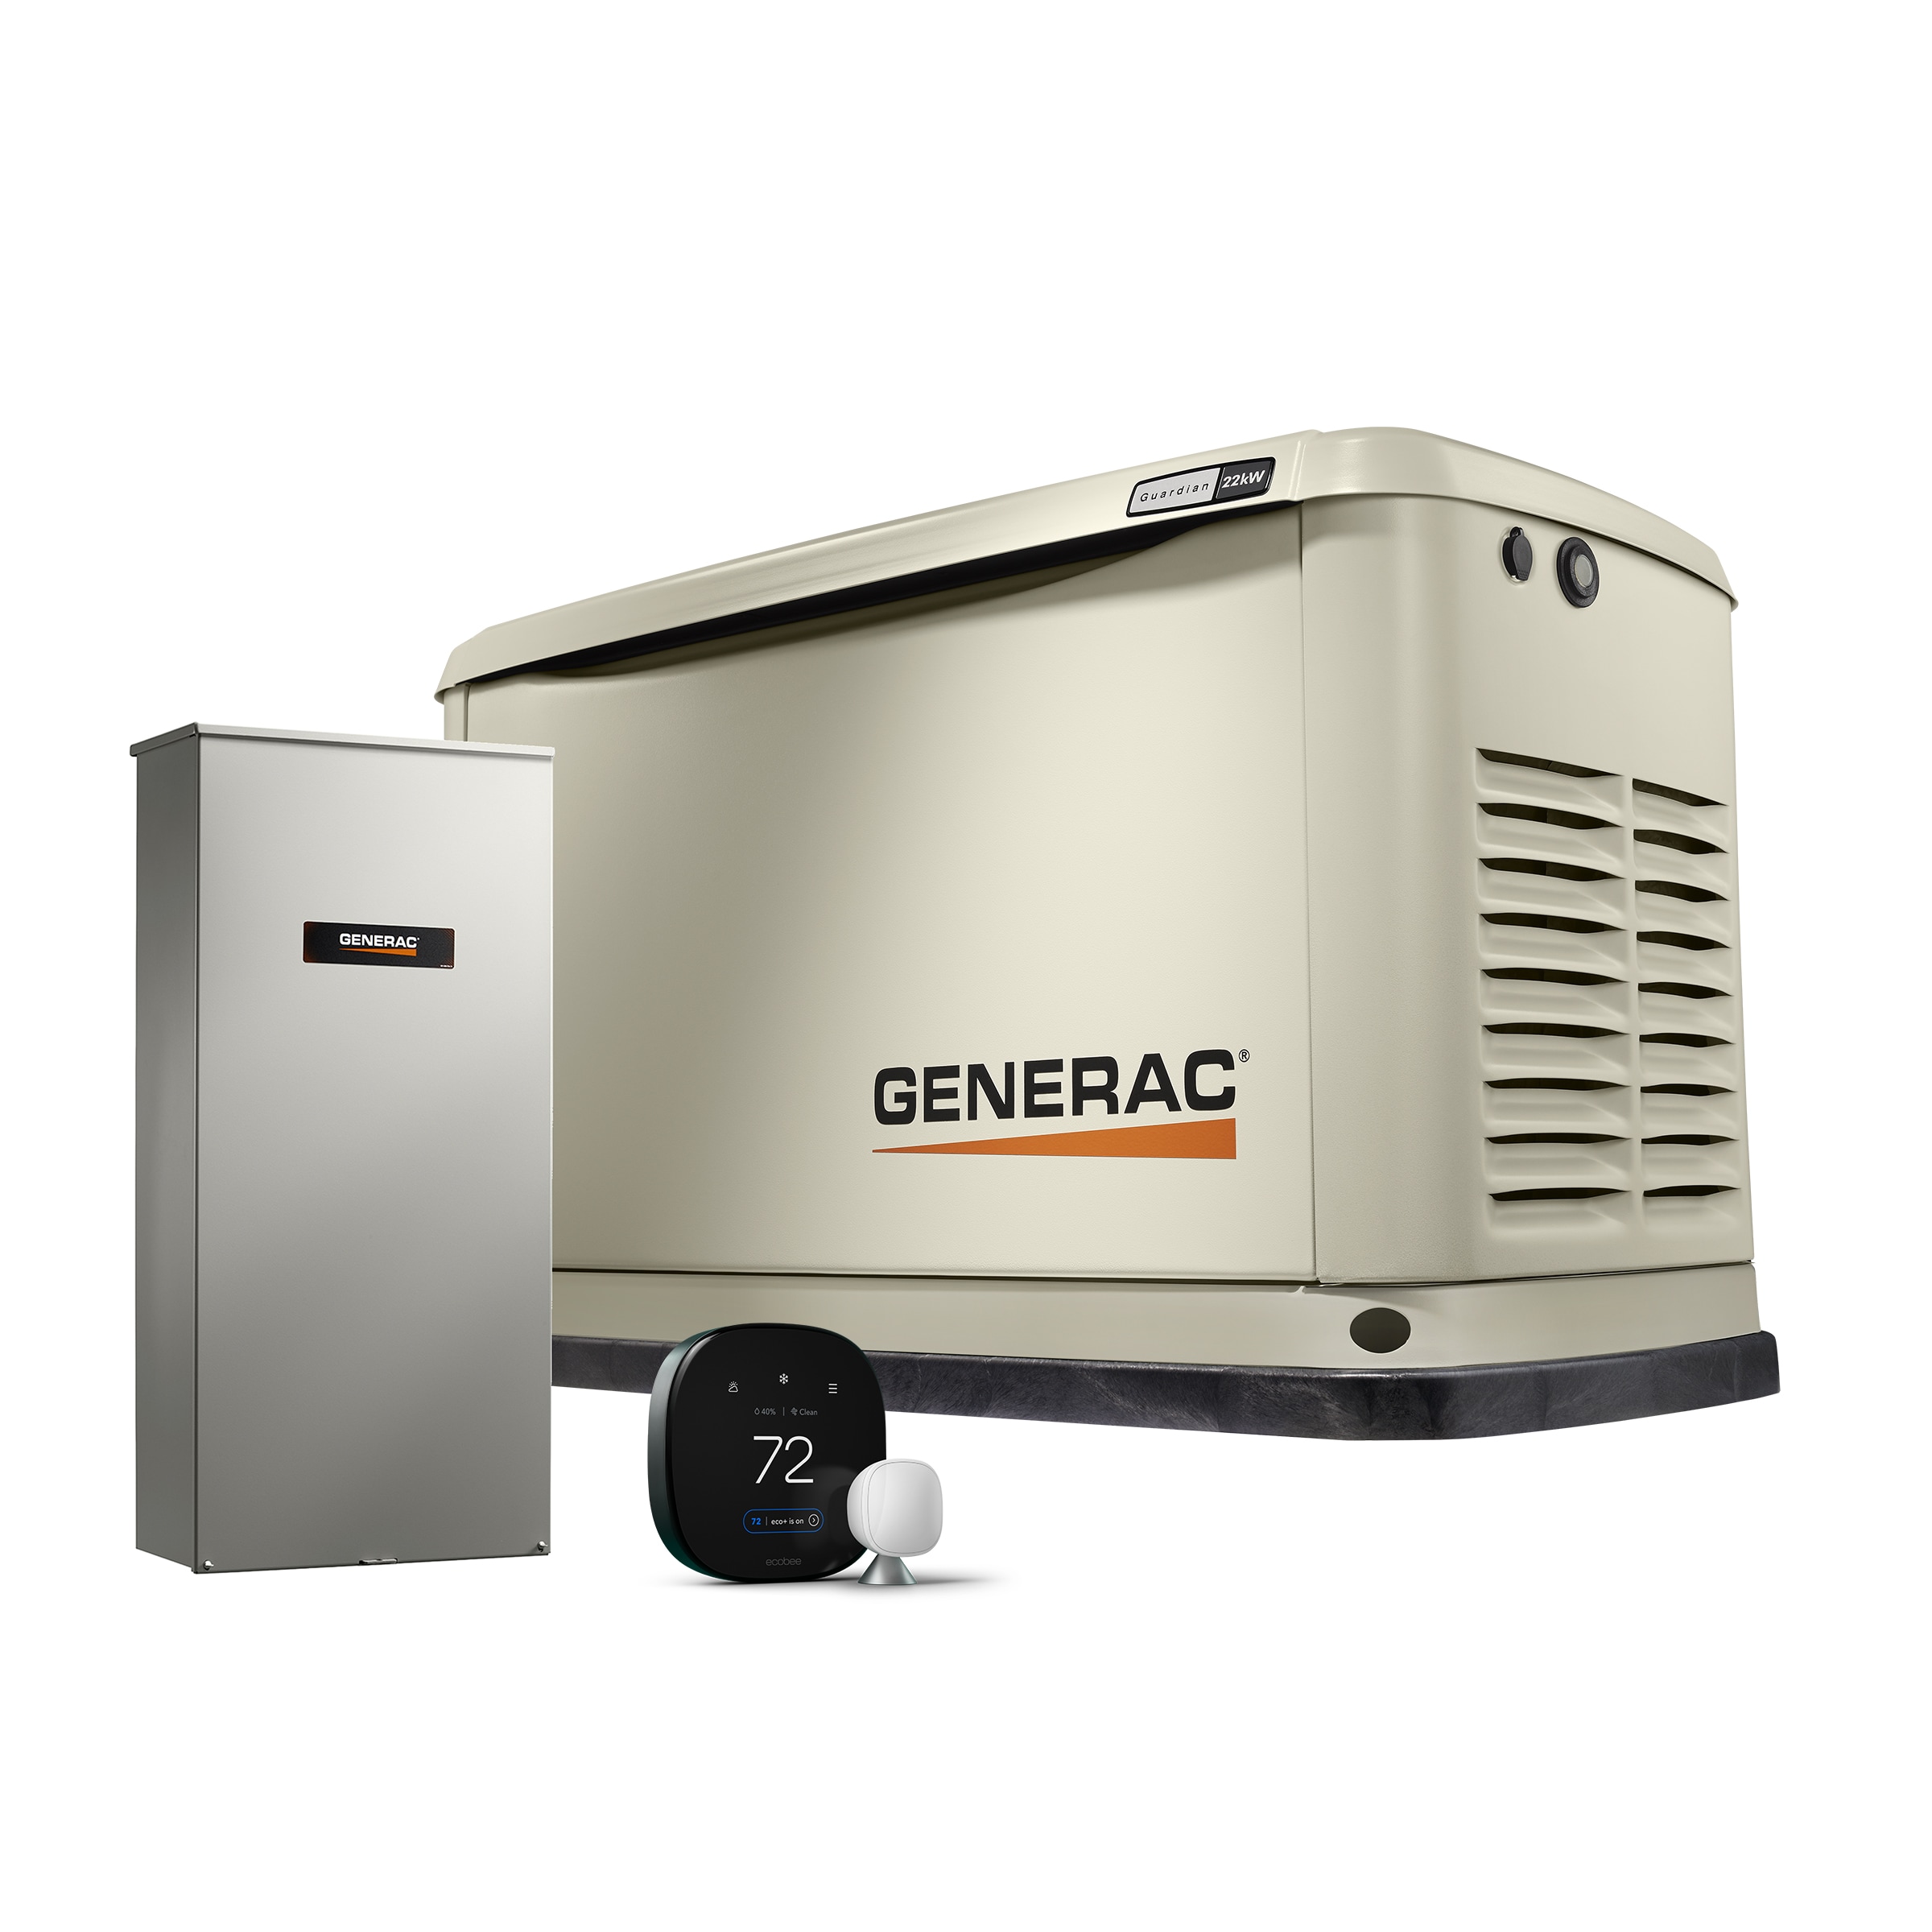 Generac 22kW Home Standby Generator + ecobee Smart Thermostat Premium Bundle